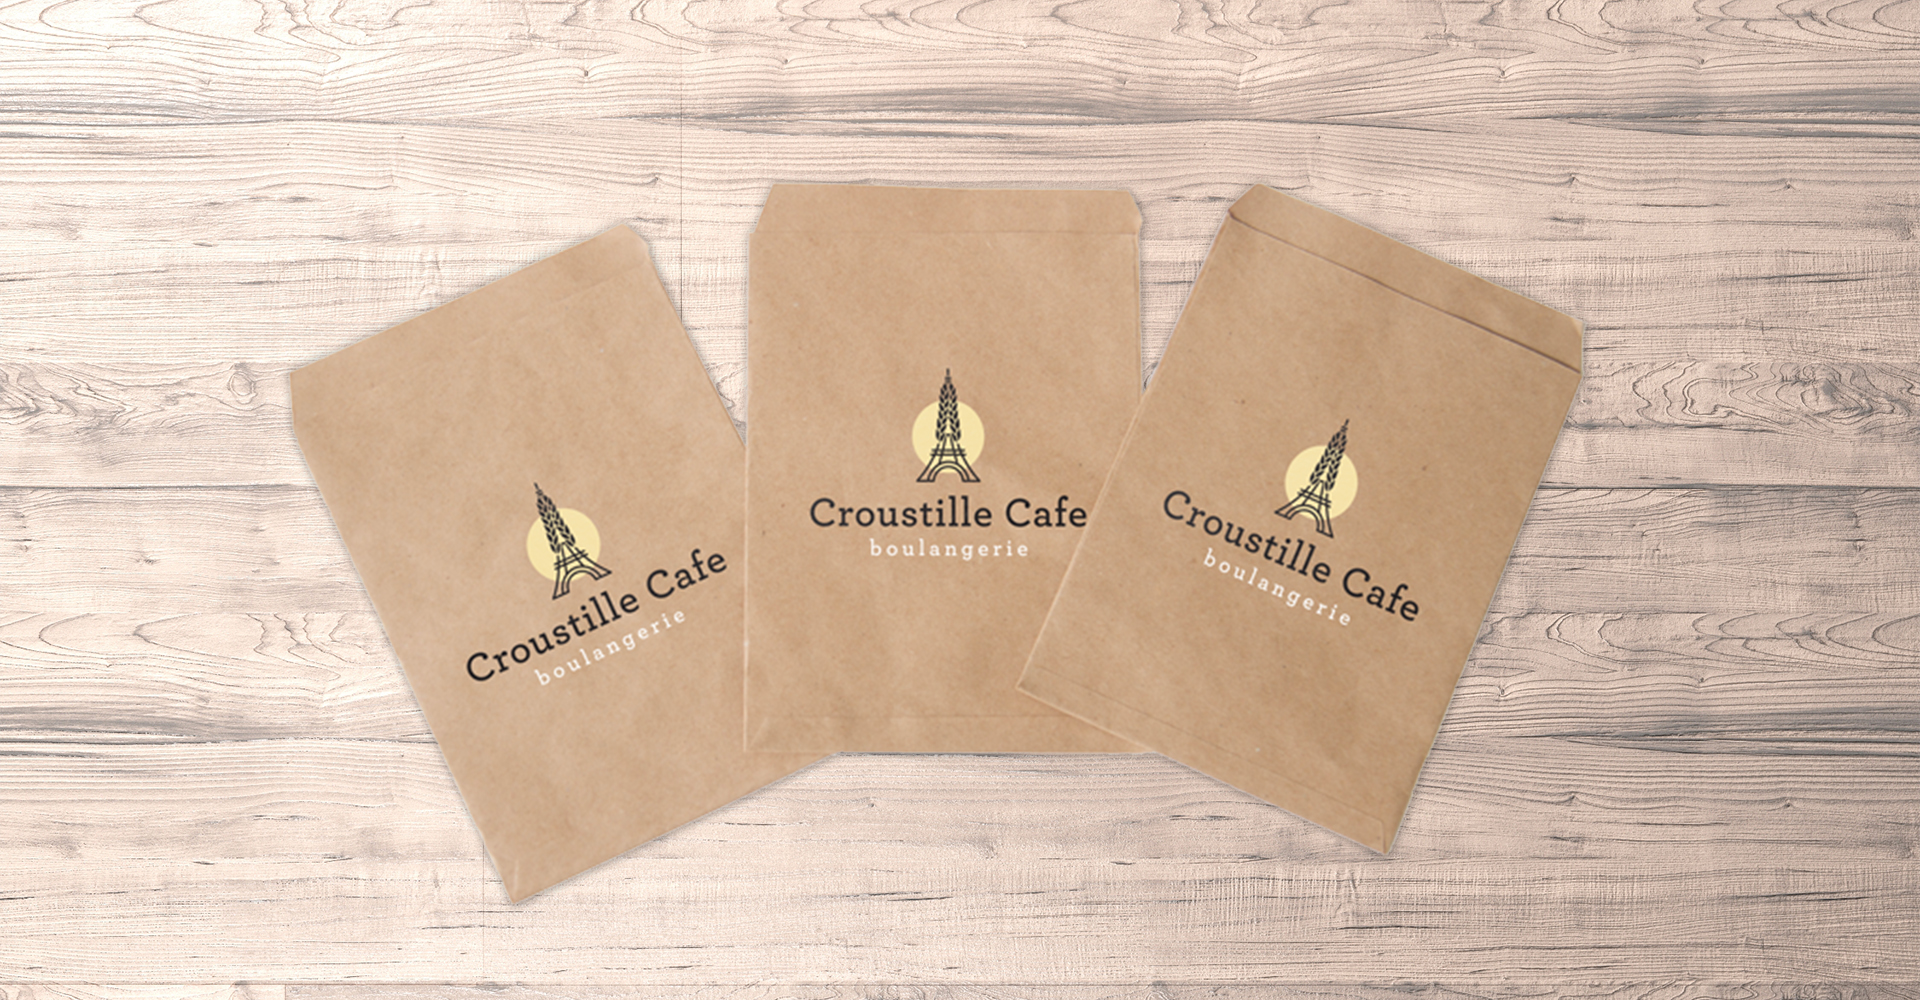 Croutille cafe bread bags